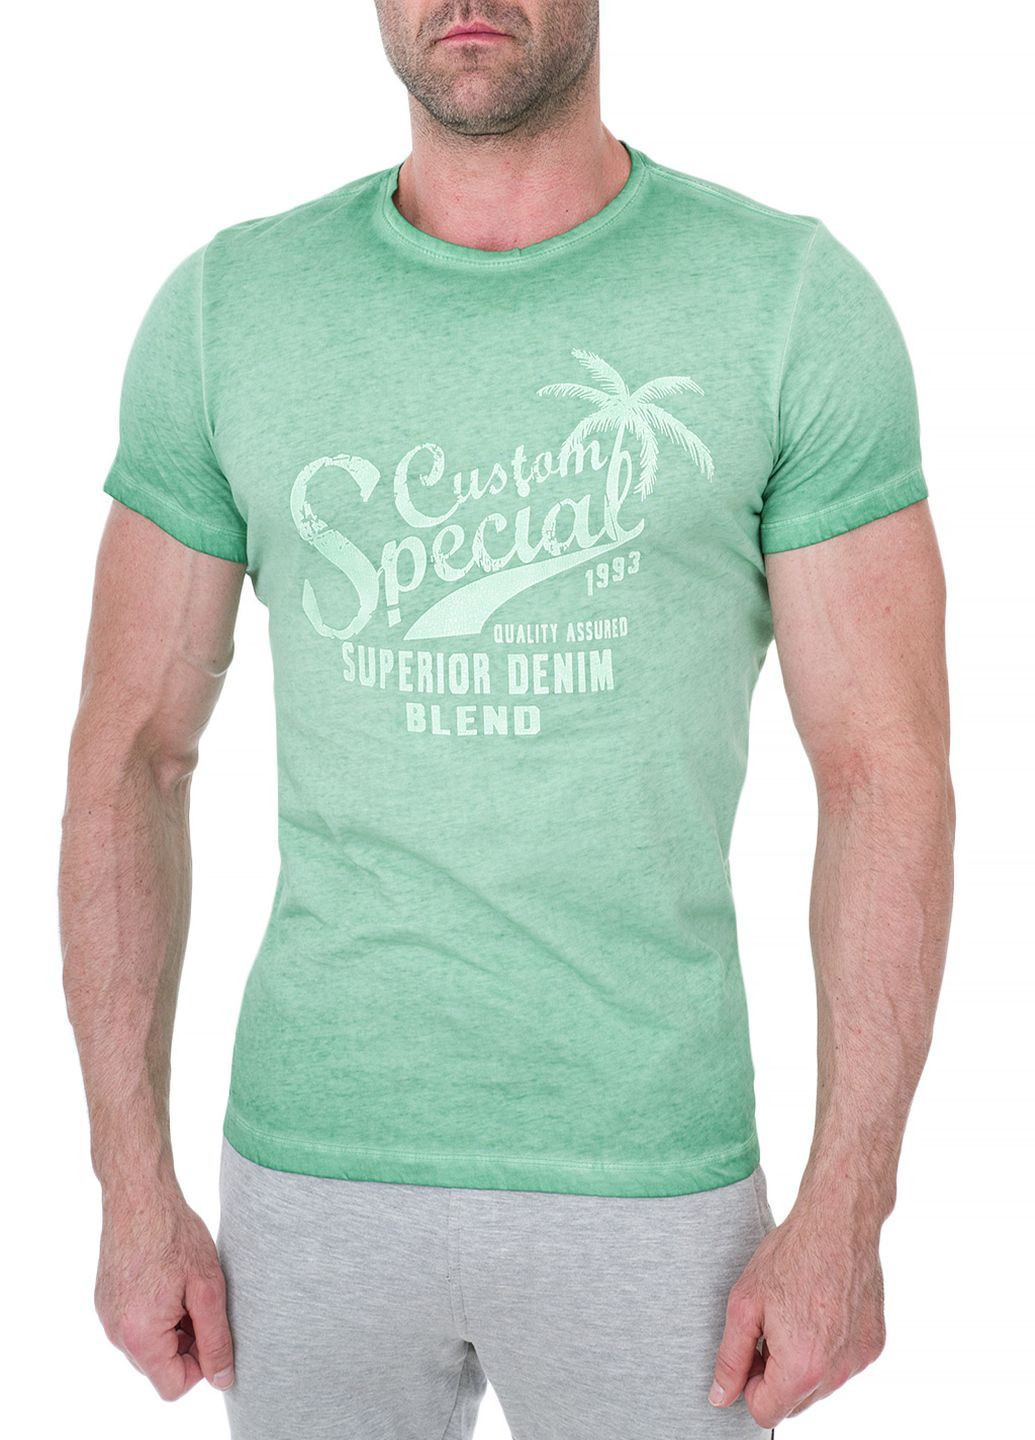 Зеленая футболка Blend